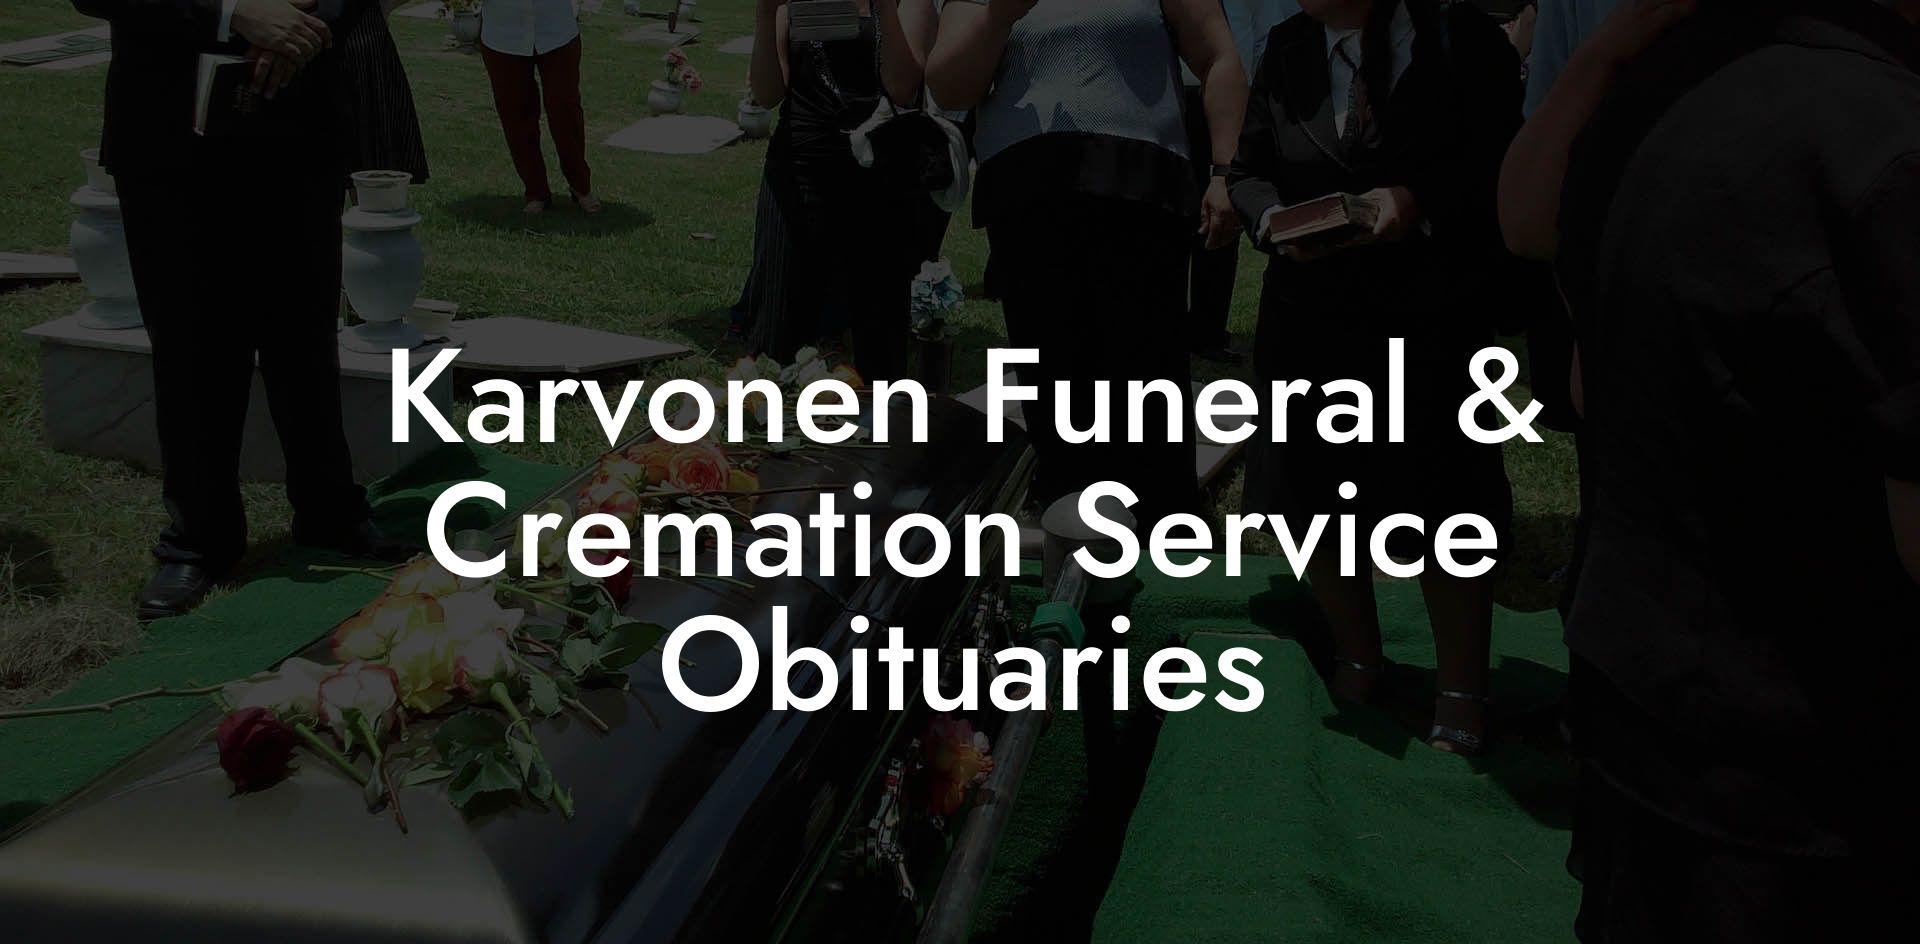 Karvonen Funeral & Cremation Service Obituaries